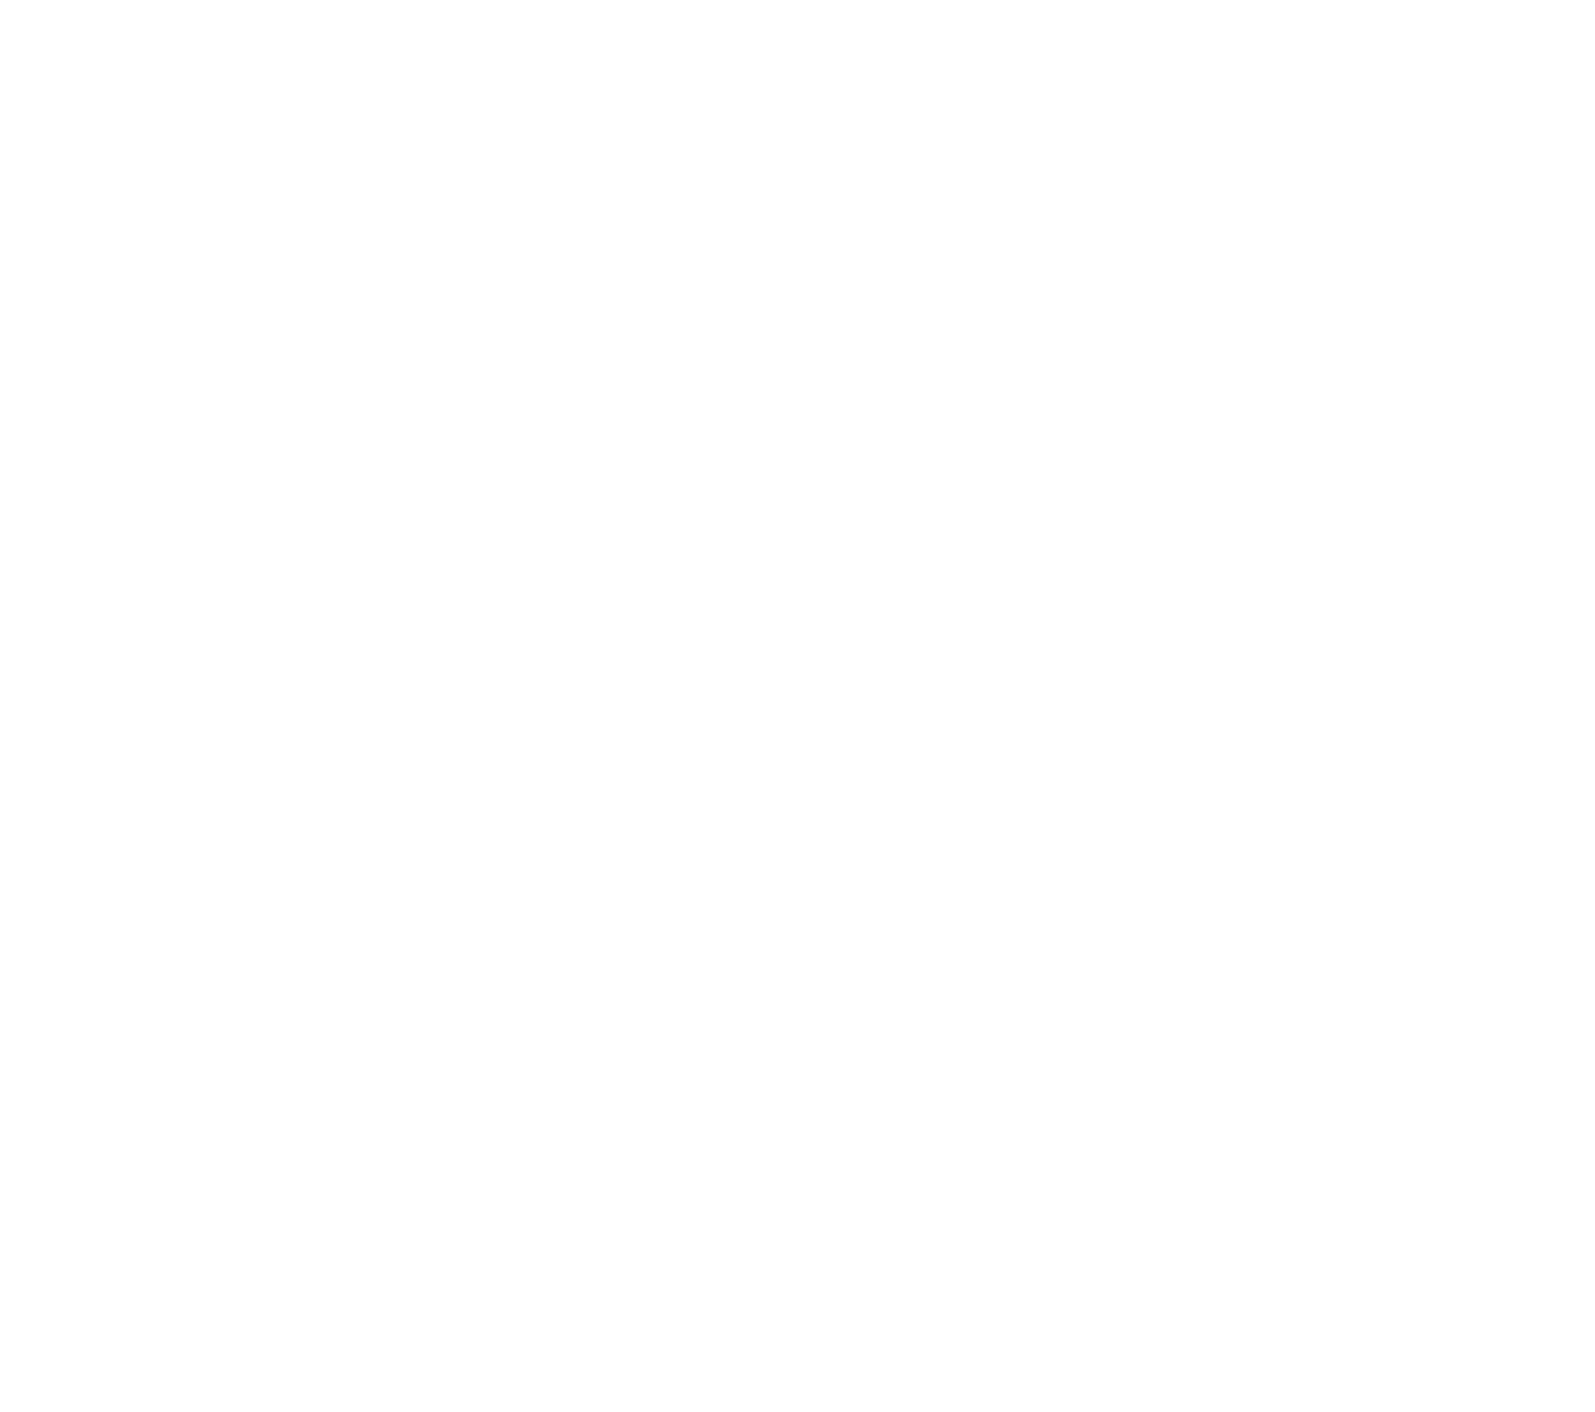 Abcam logo for dark backgrounds (transparent PNG)